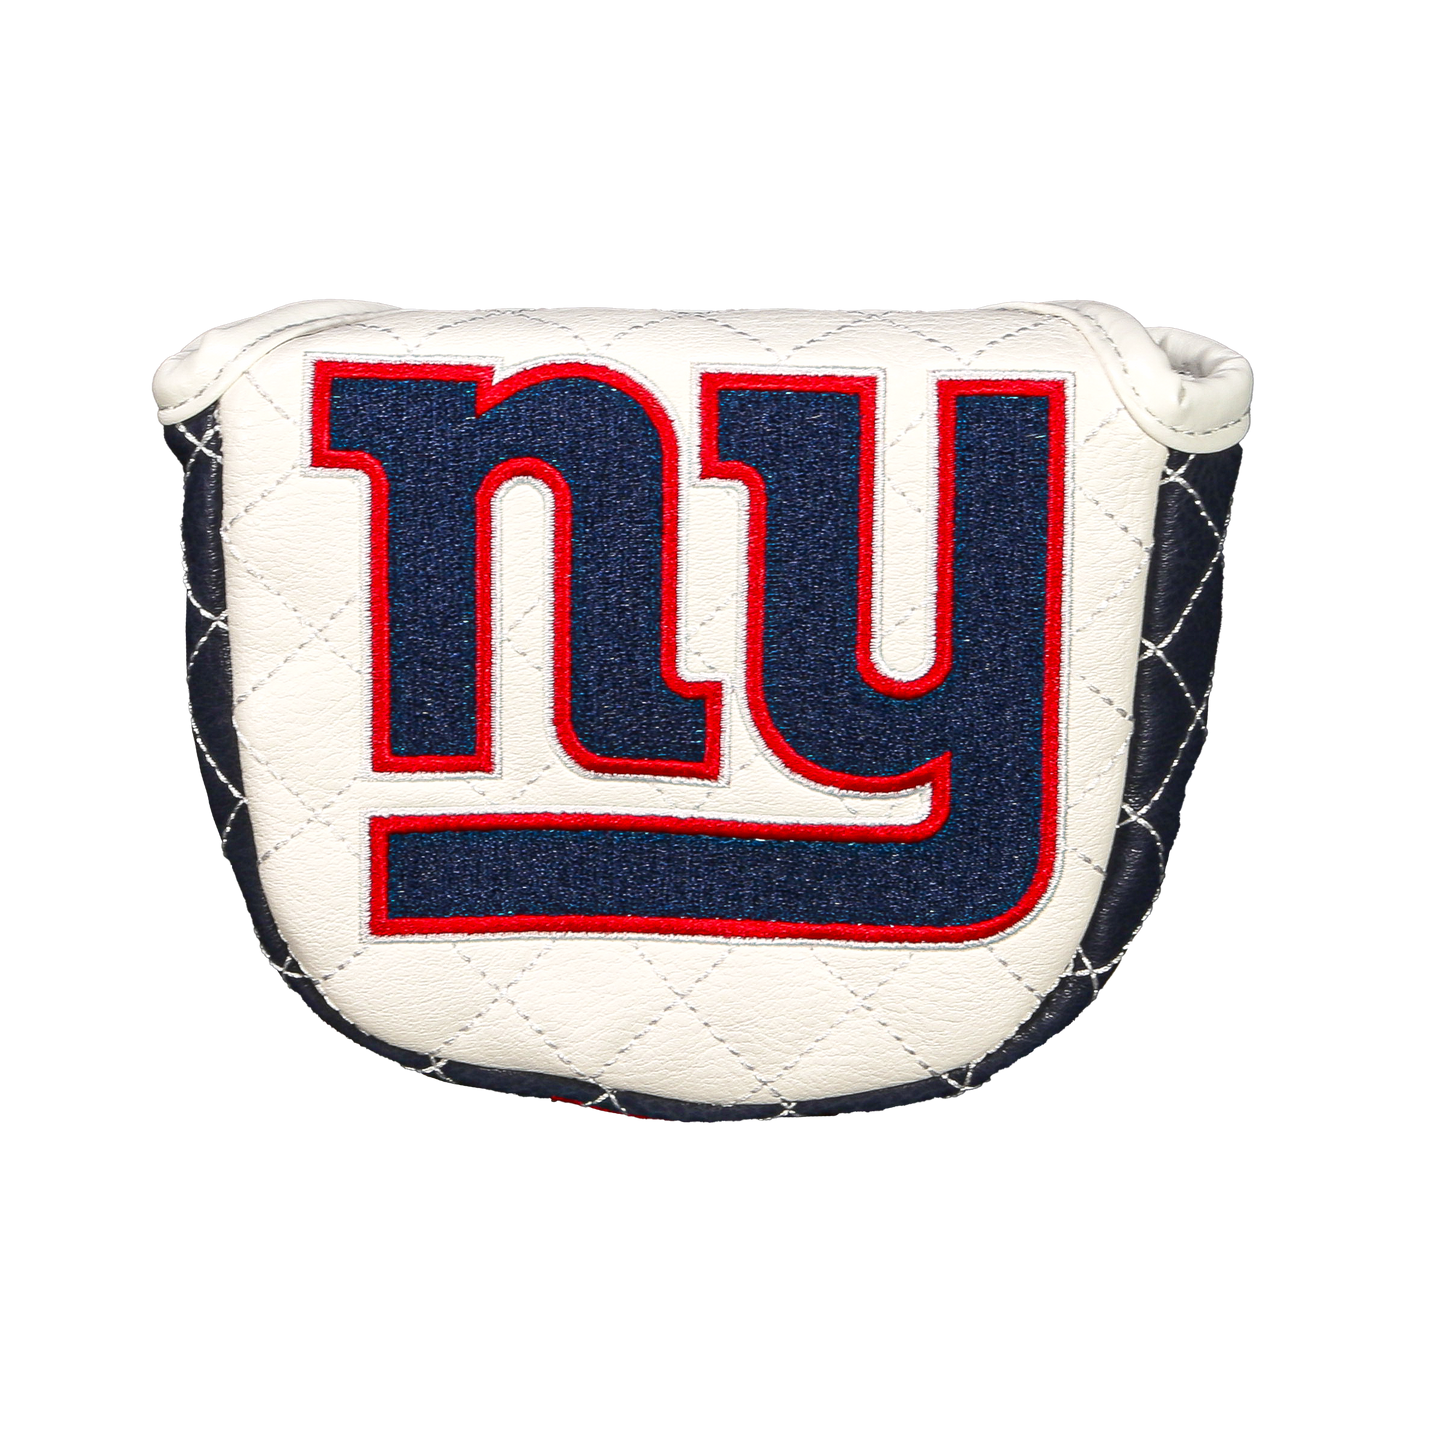 New York "Giants" Mallet Putter Cover